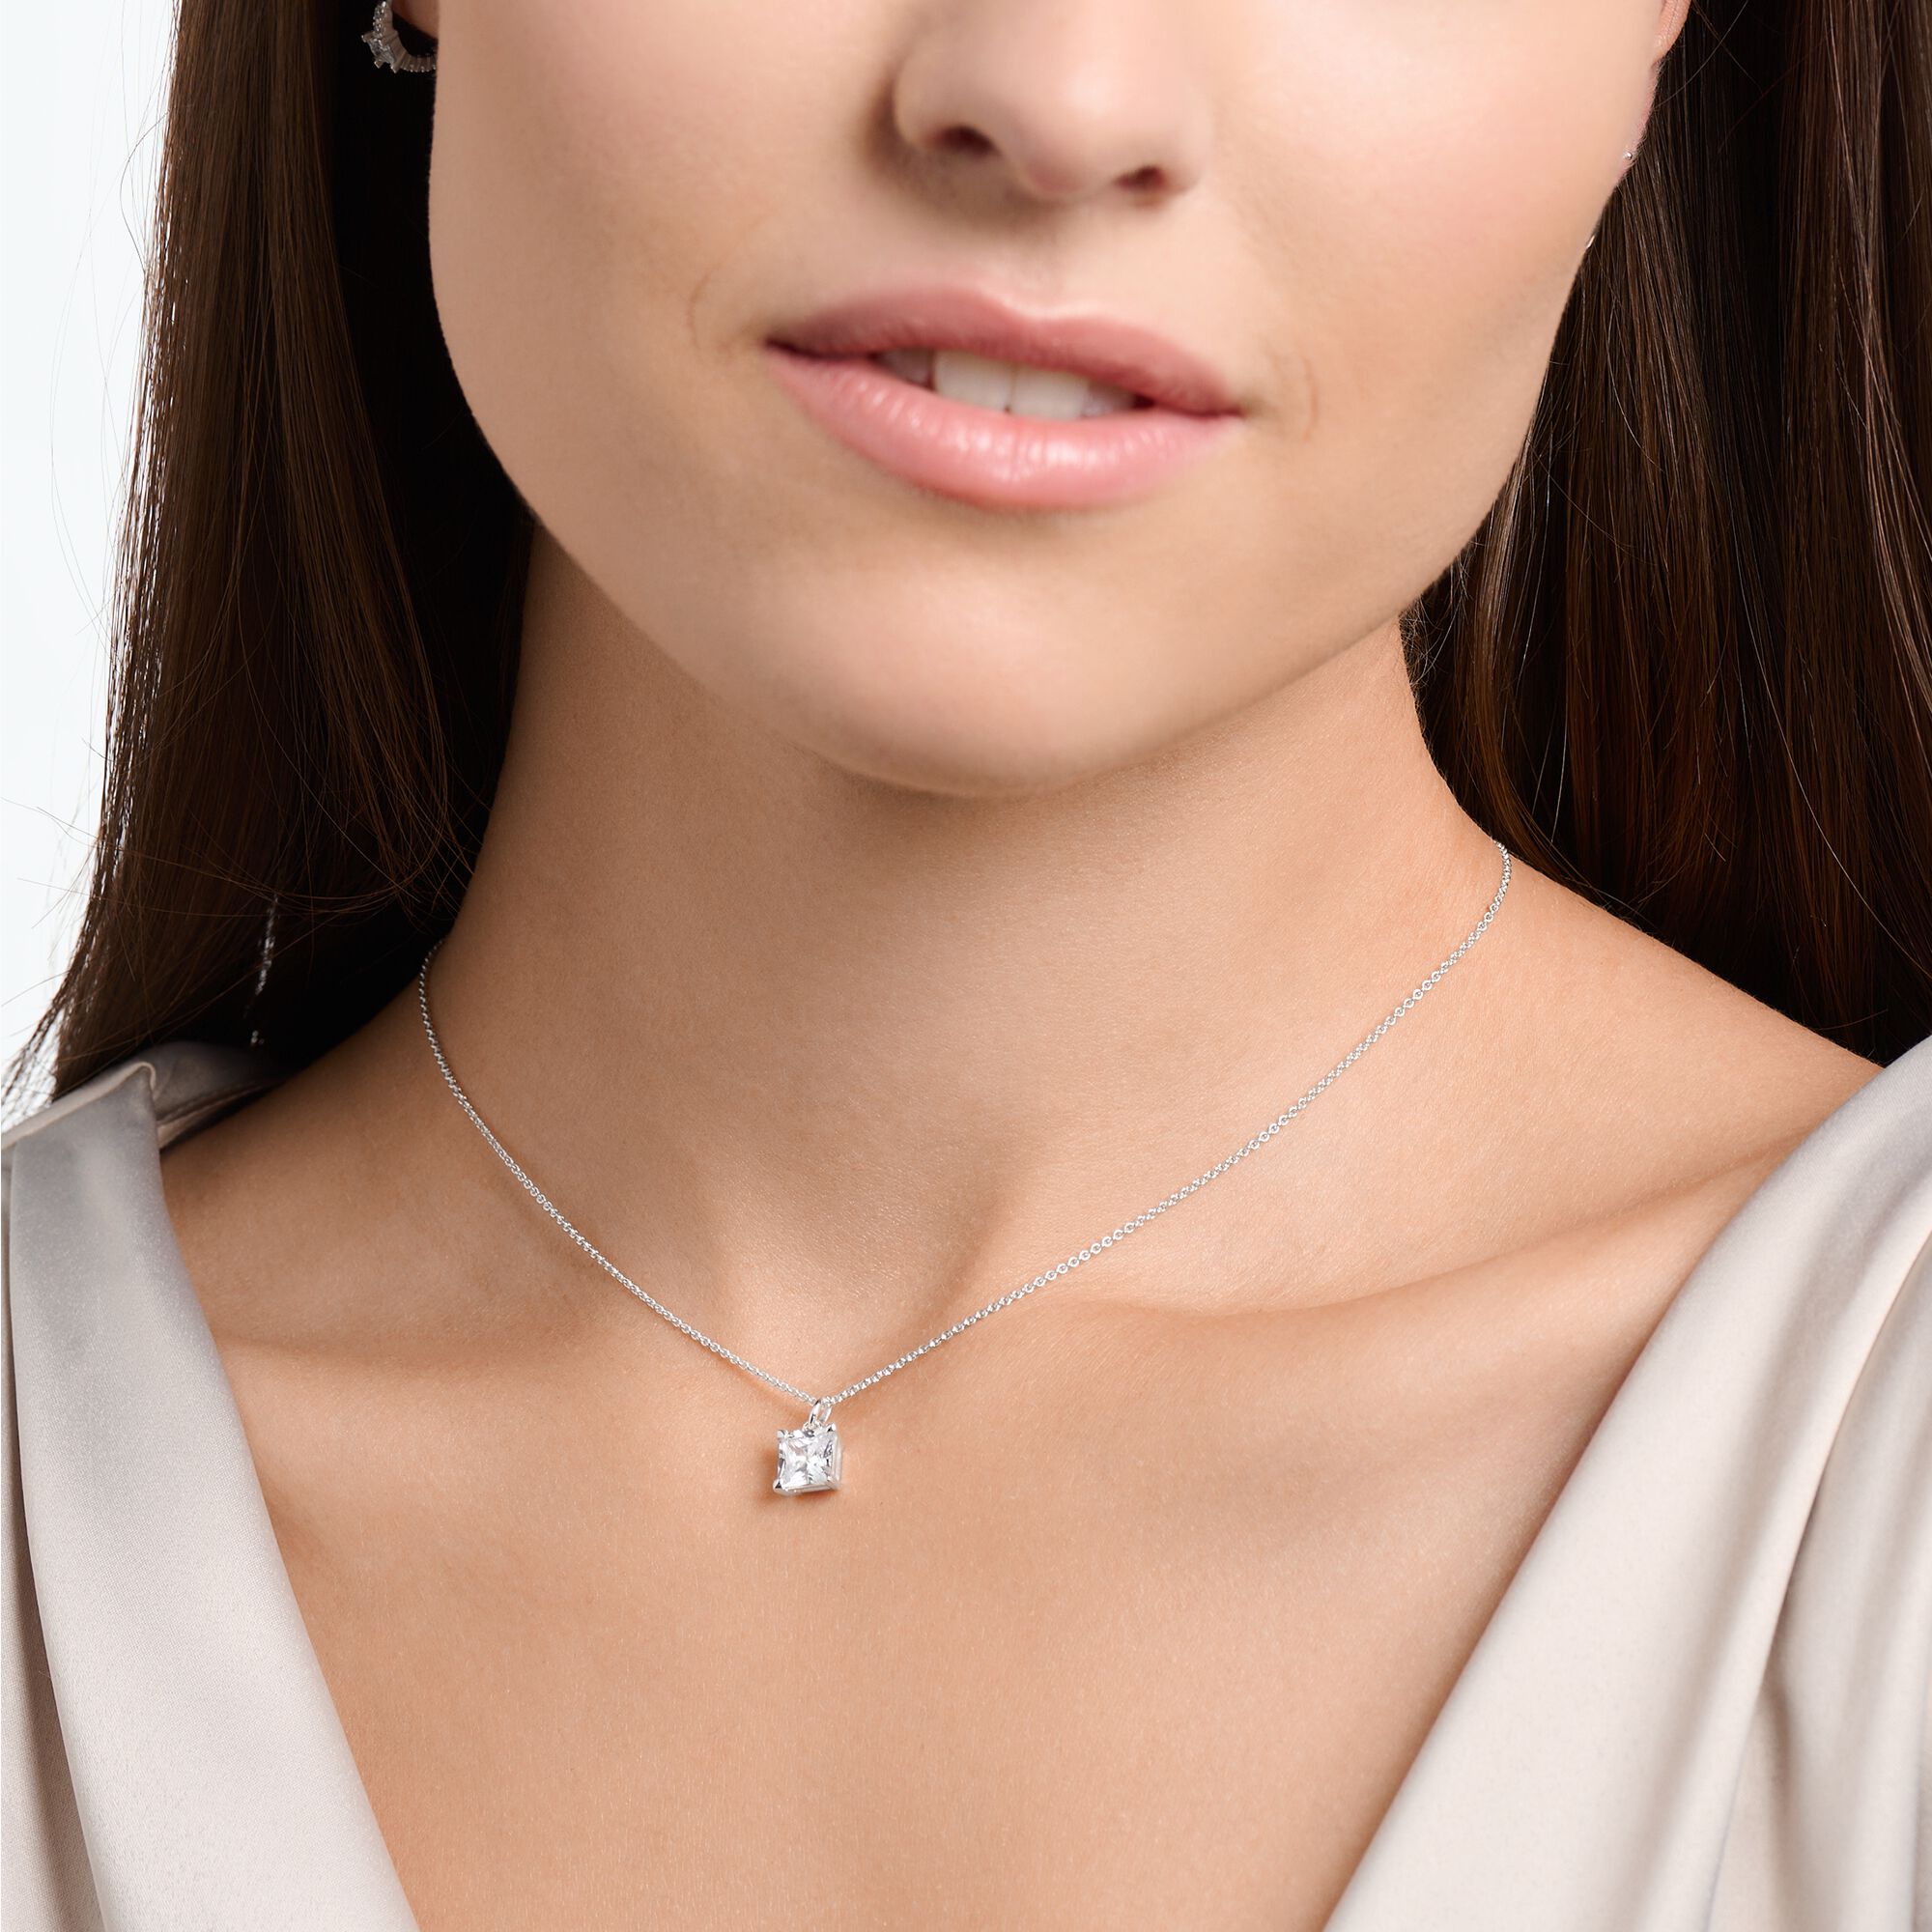 Necklace – Zirconia stone silver THOMAS & with SABO pendant: